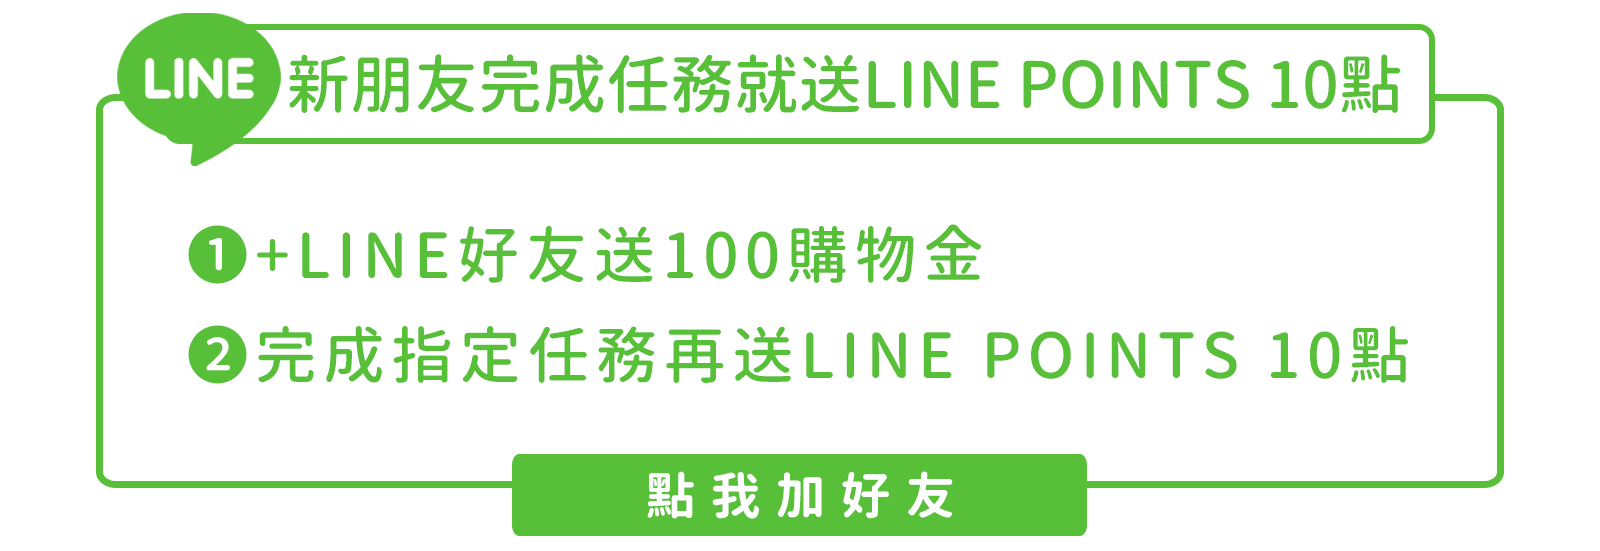  LINE新朋友完成任務就送LINE POINTS 10點 ❶+LINE好友送100購物金 ❷完成指定任務再送LINE POINTS 10 點